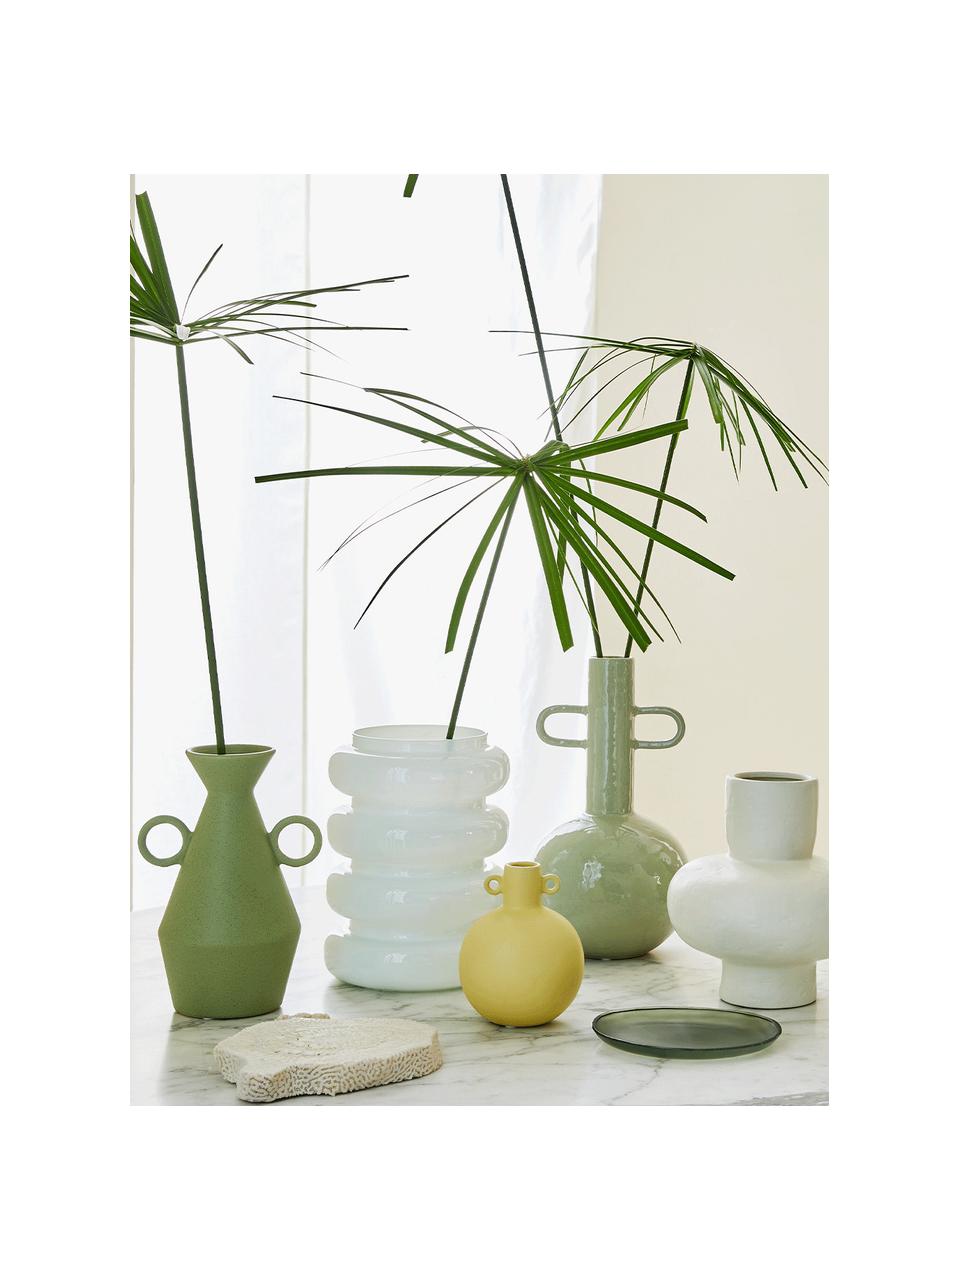 Design-Vase Bulb aus recyceltem Glas, 25 cm, Glas, Weiss, Ø 19 x H 25 cm